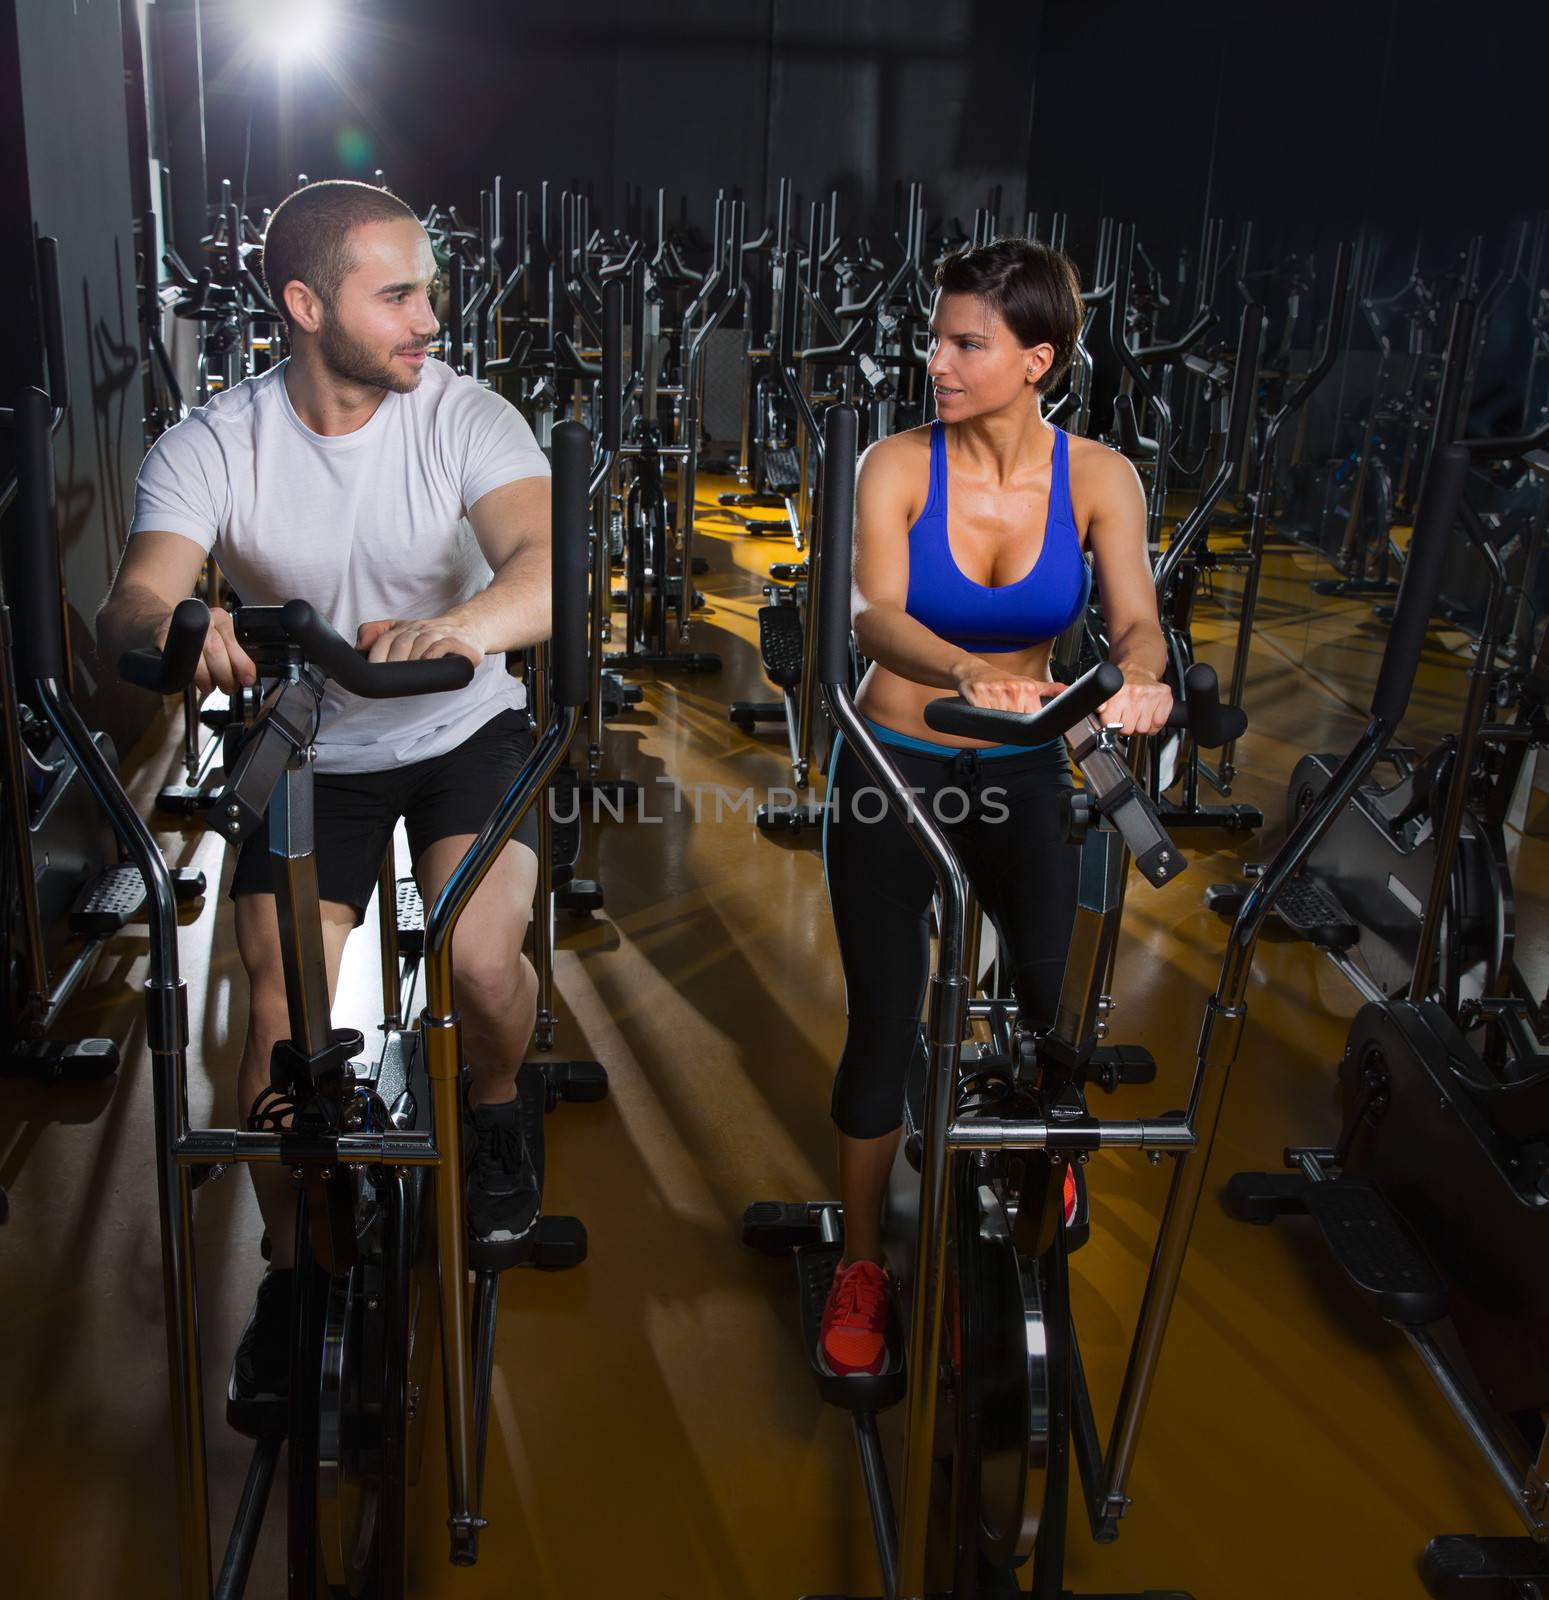 elliptical walker trainer man and woman at black gym by lunamarina